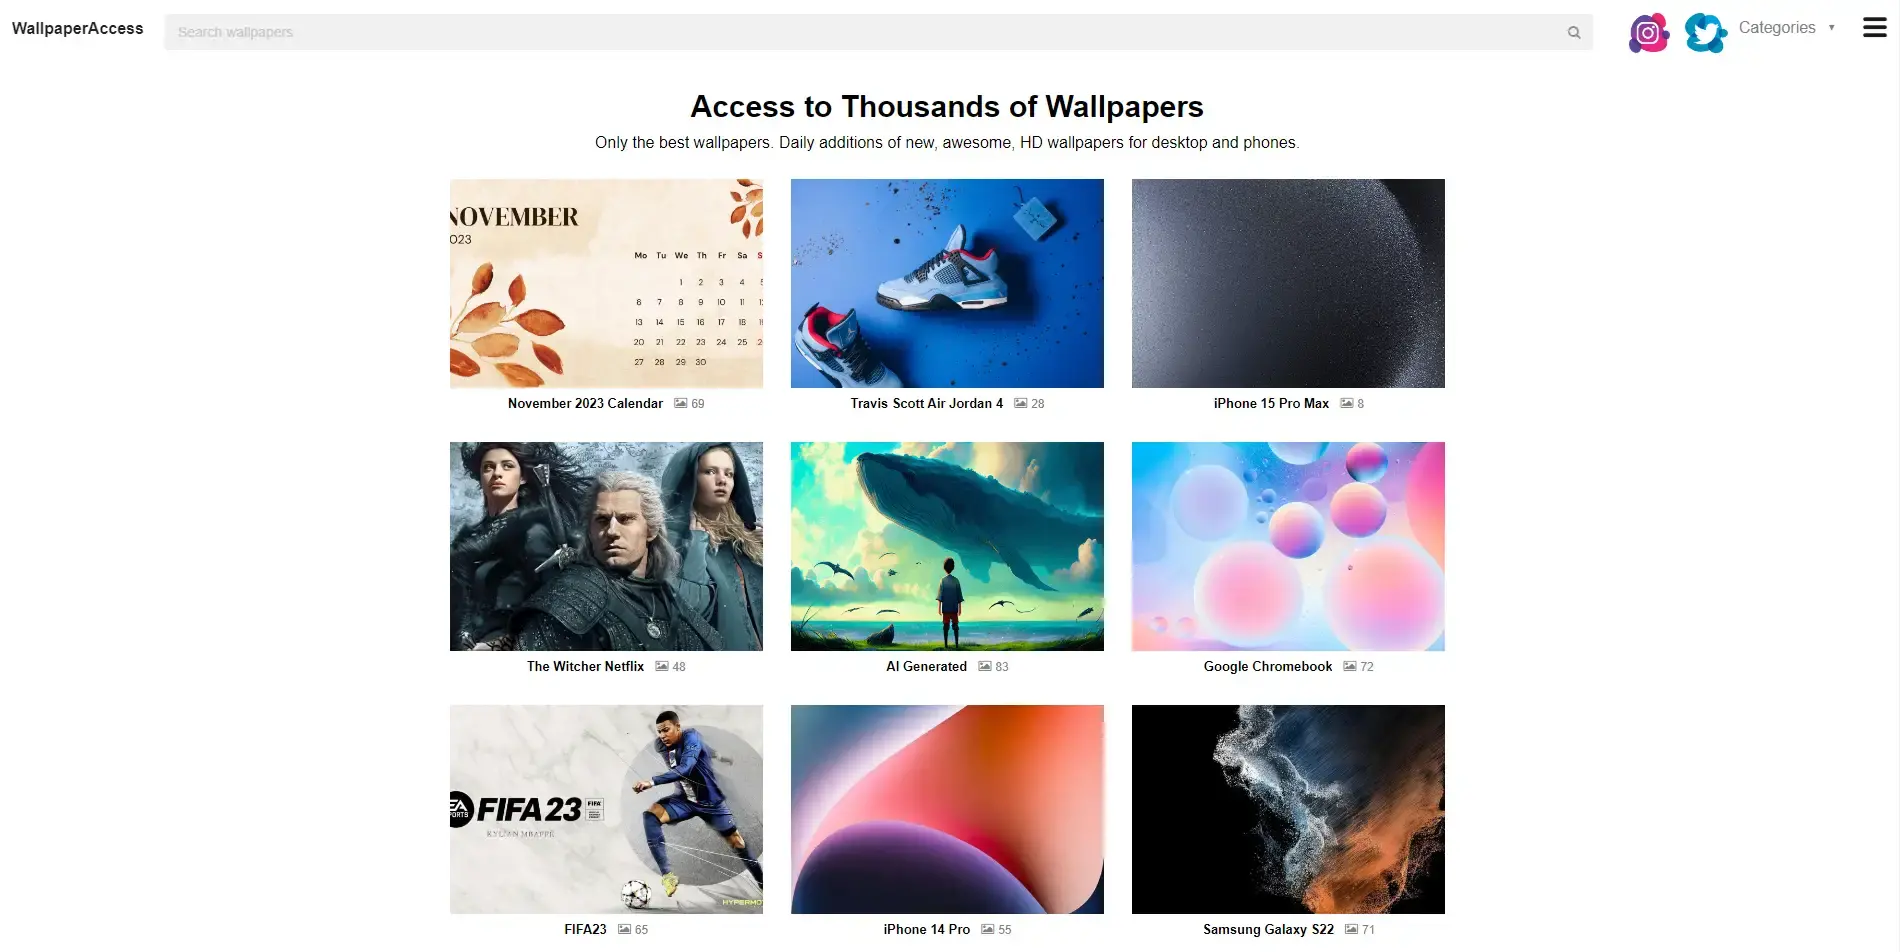 Blogduwebdesign ressources fonds ecran ordinateur pc telecharger wallpaper access